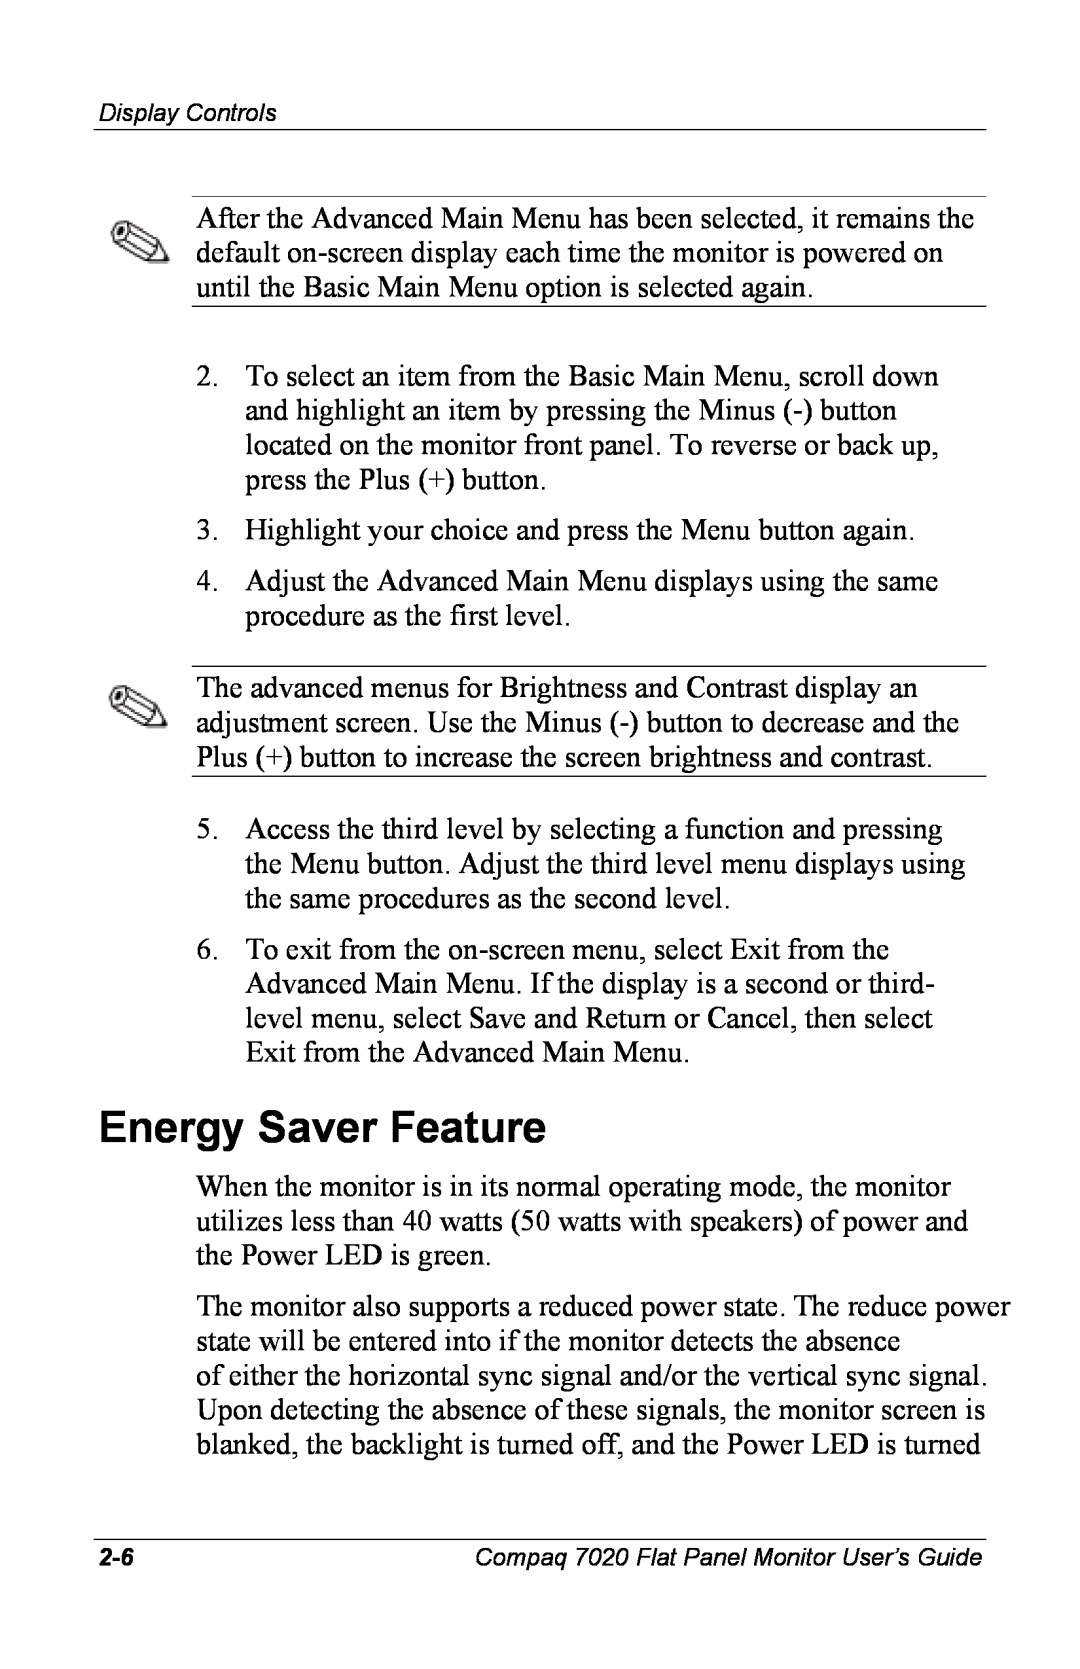 Compaq 7020 manual Energy Saver Feature 